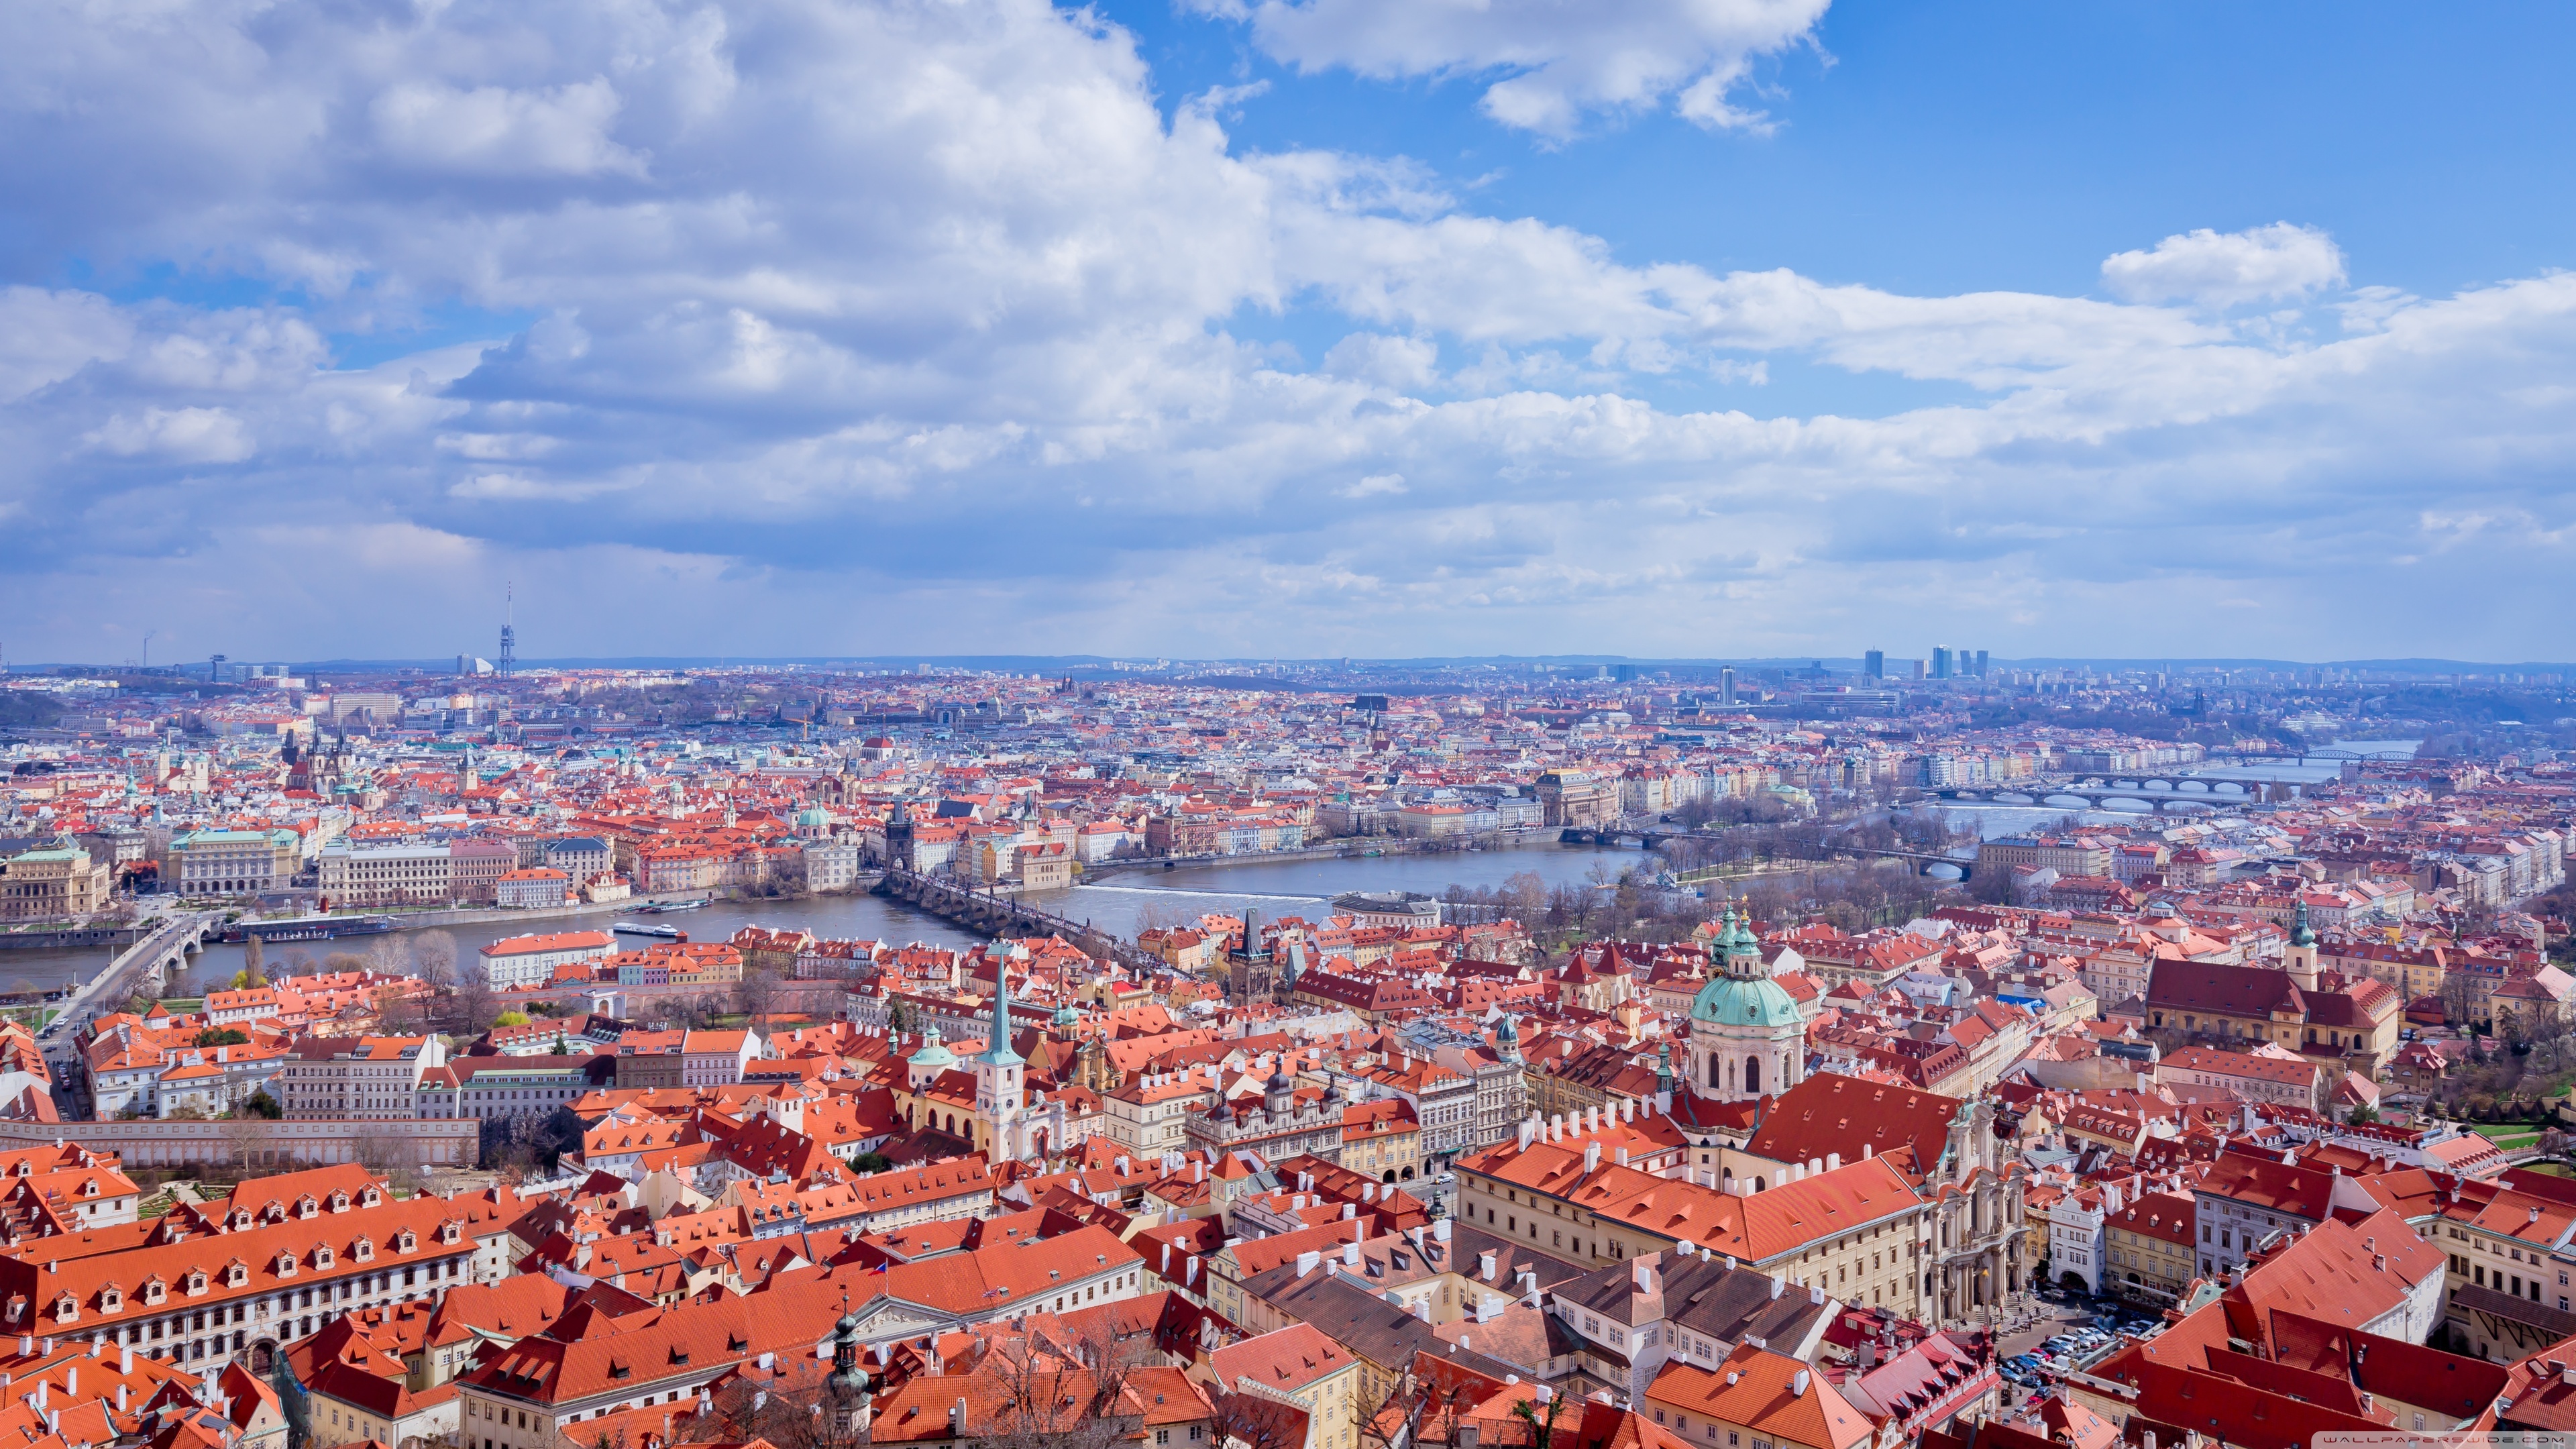 Prague: Czech Republic, A political, cultural, and economic hub of central Europe. 3840x2160 4K Wallpaper.